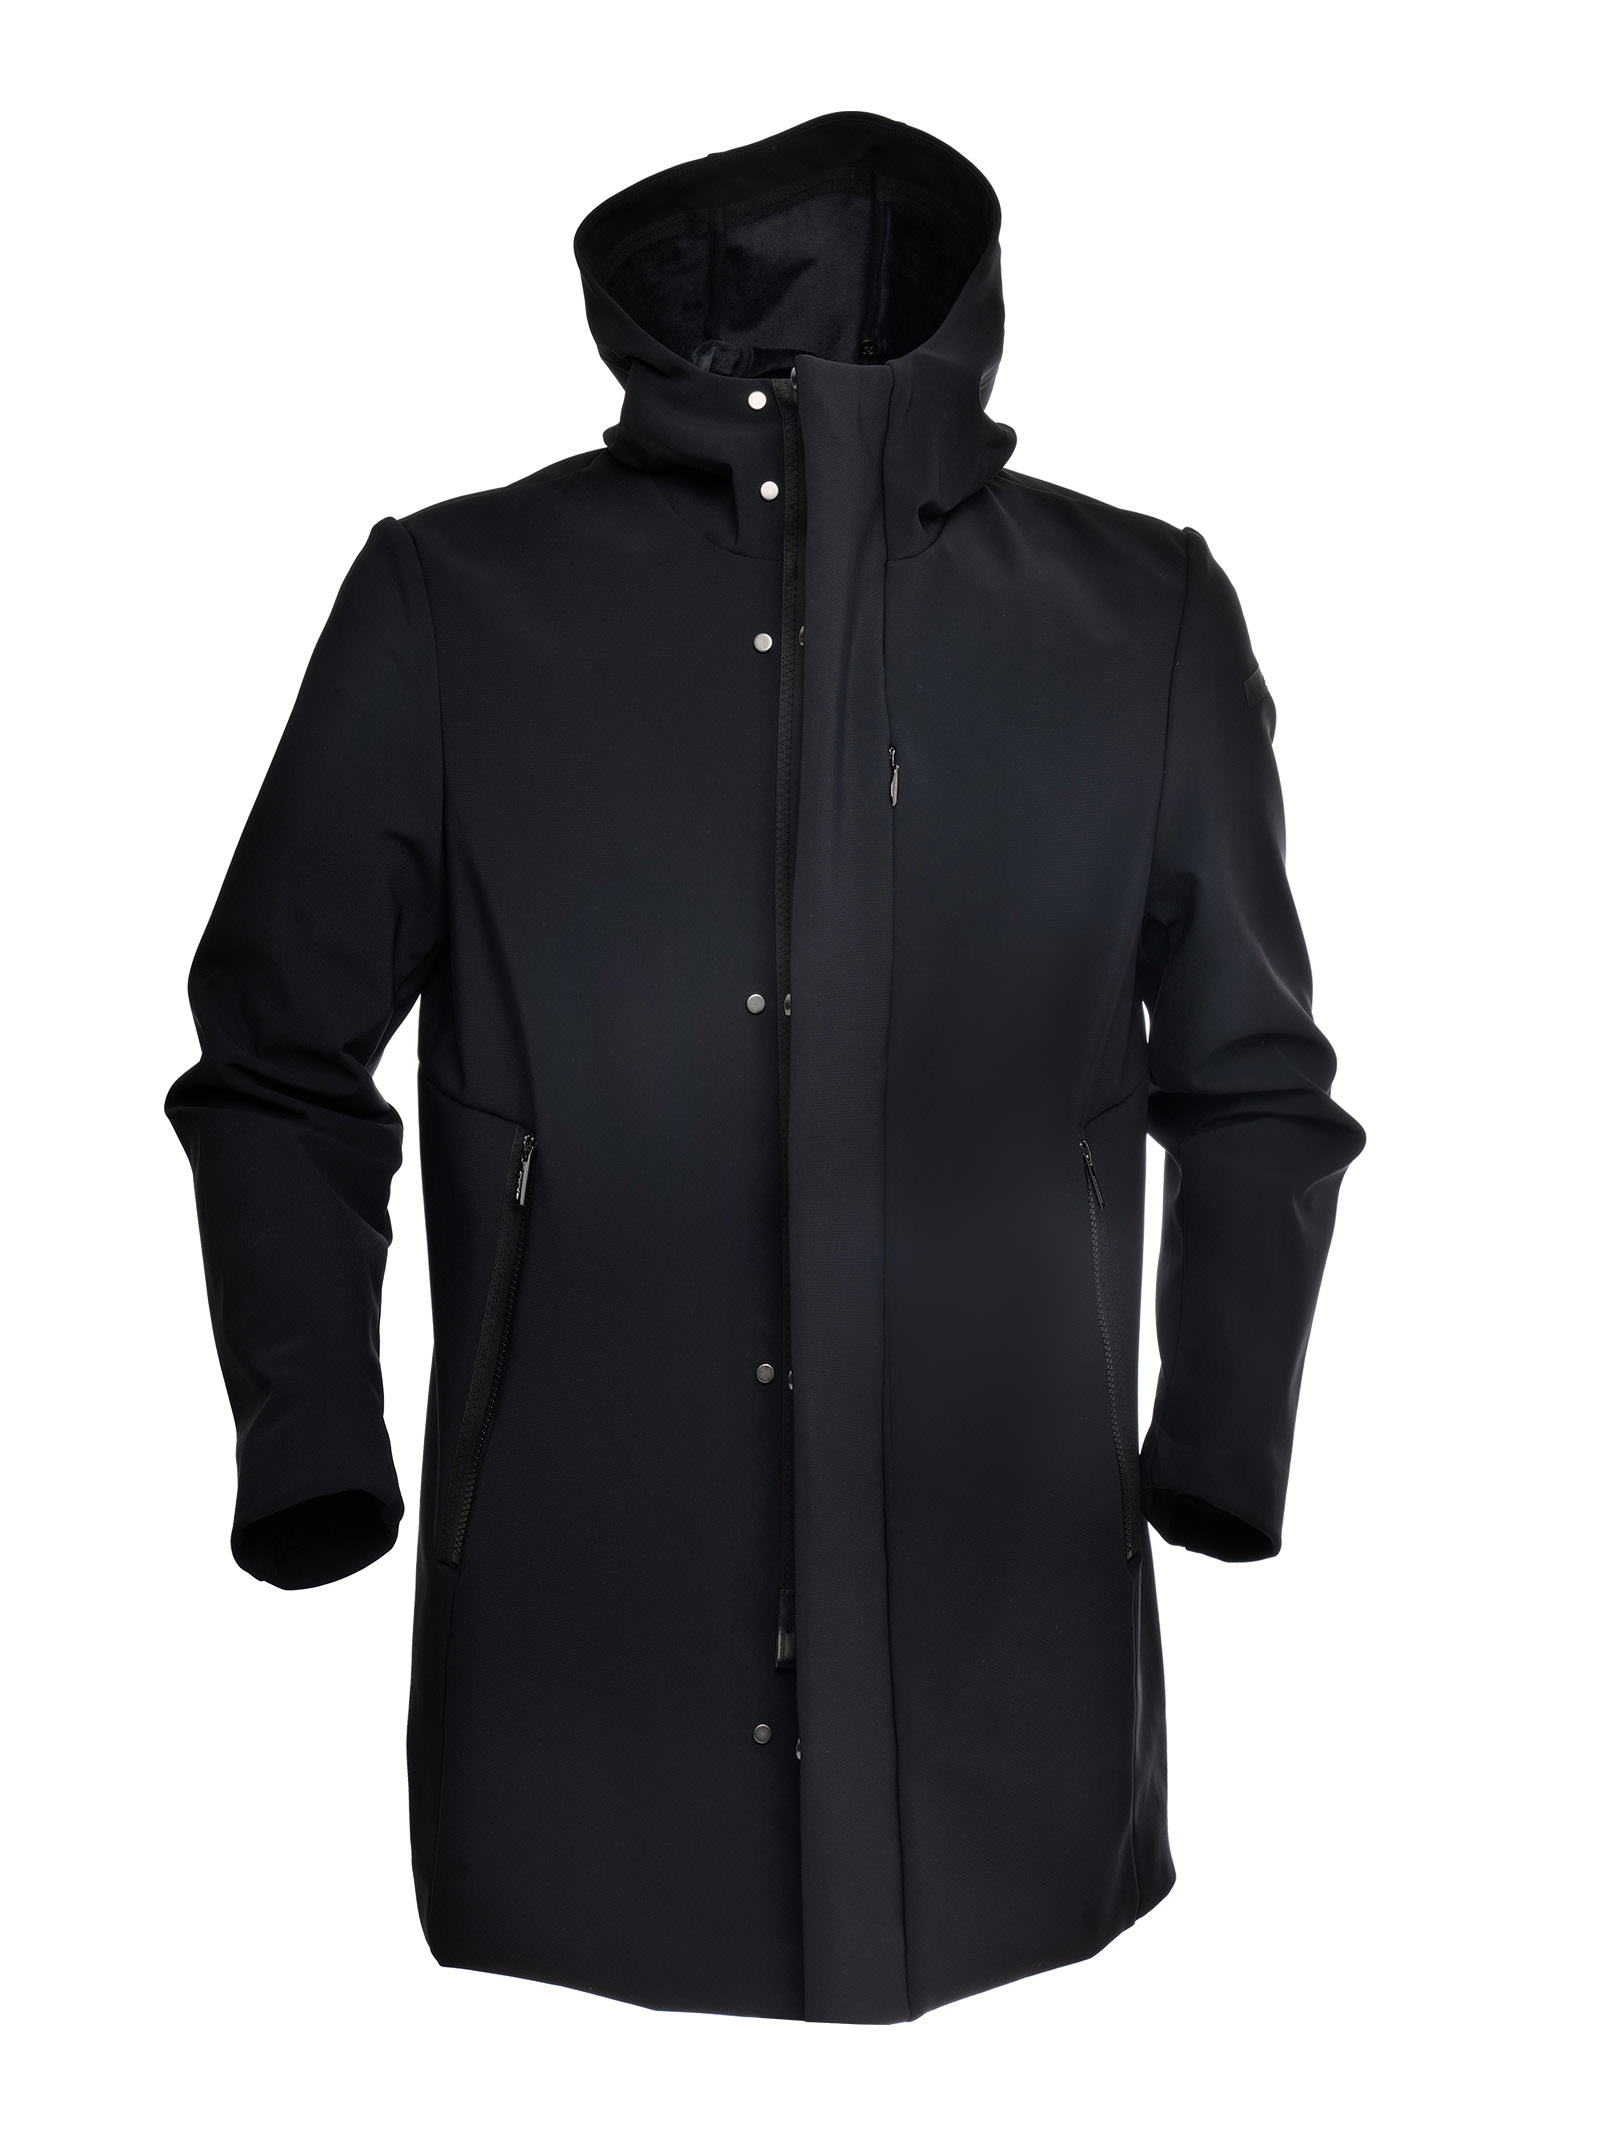 RRD - Roberto Ricci Design Thermo Jacket With Hood